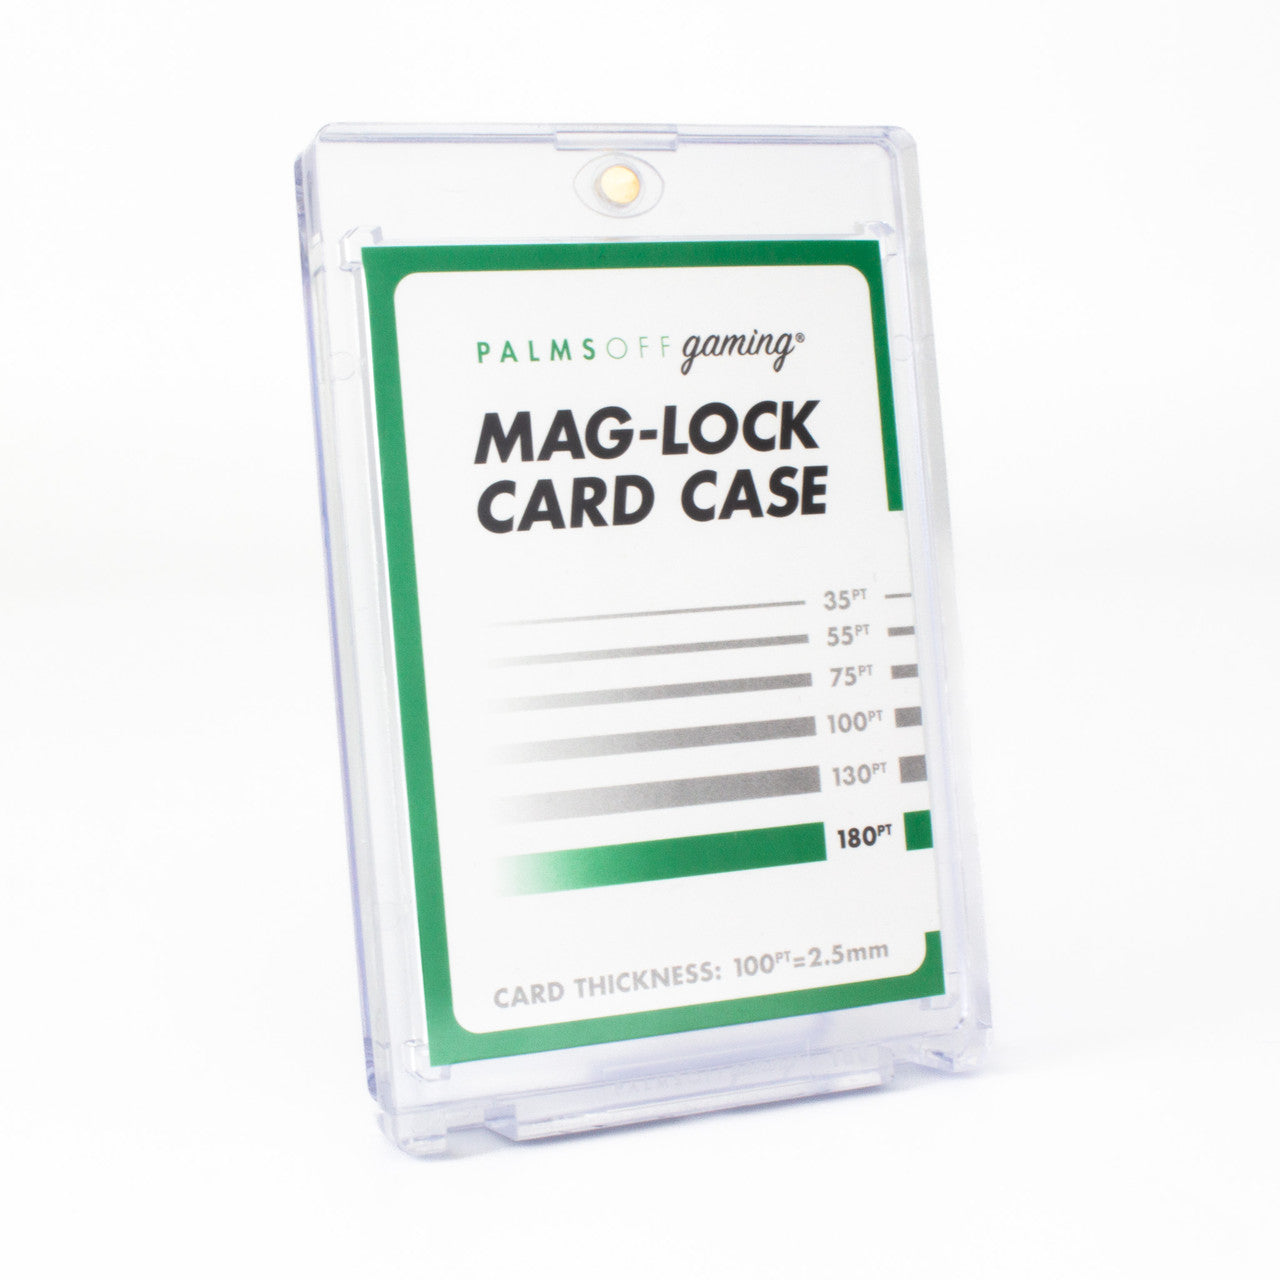 Palms Off Gaming 180pt Mag-Lock Card Case